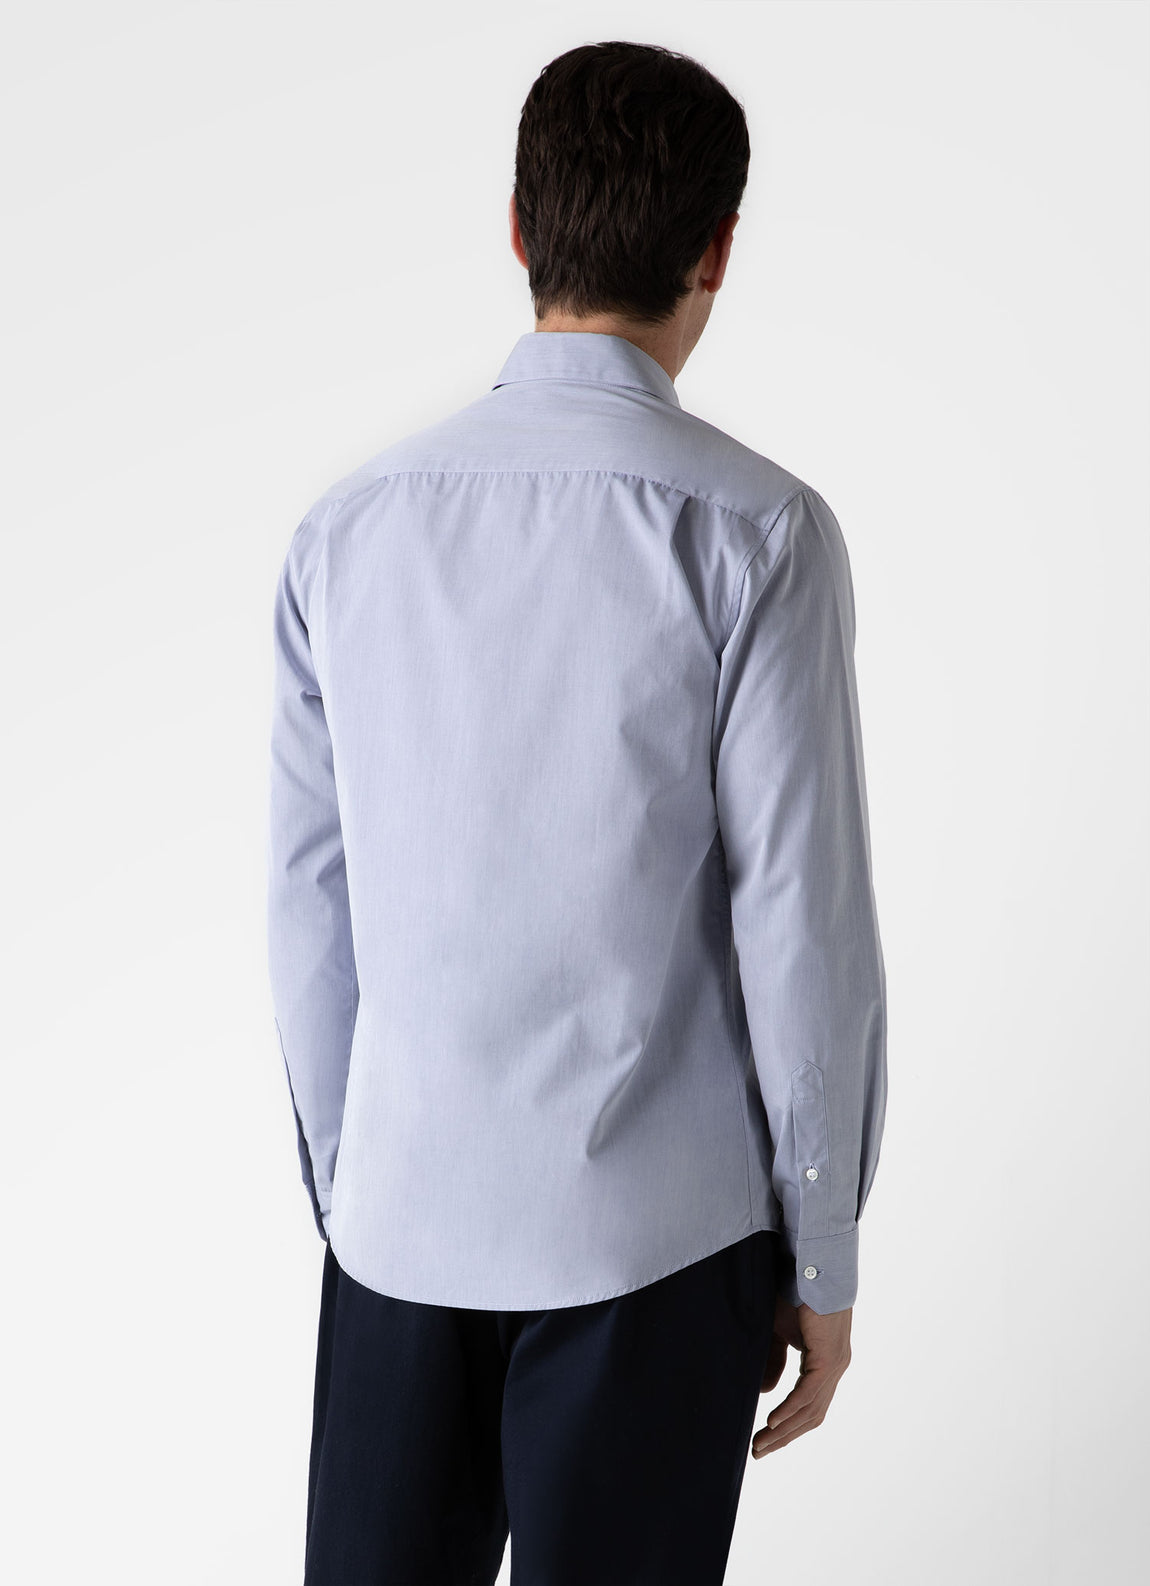 Men's Sea Island Cotton Shirt in Light Blue | Sunspel